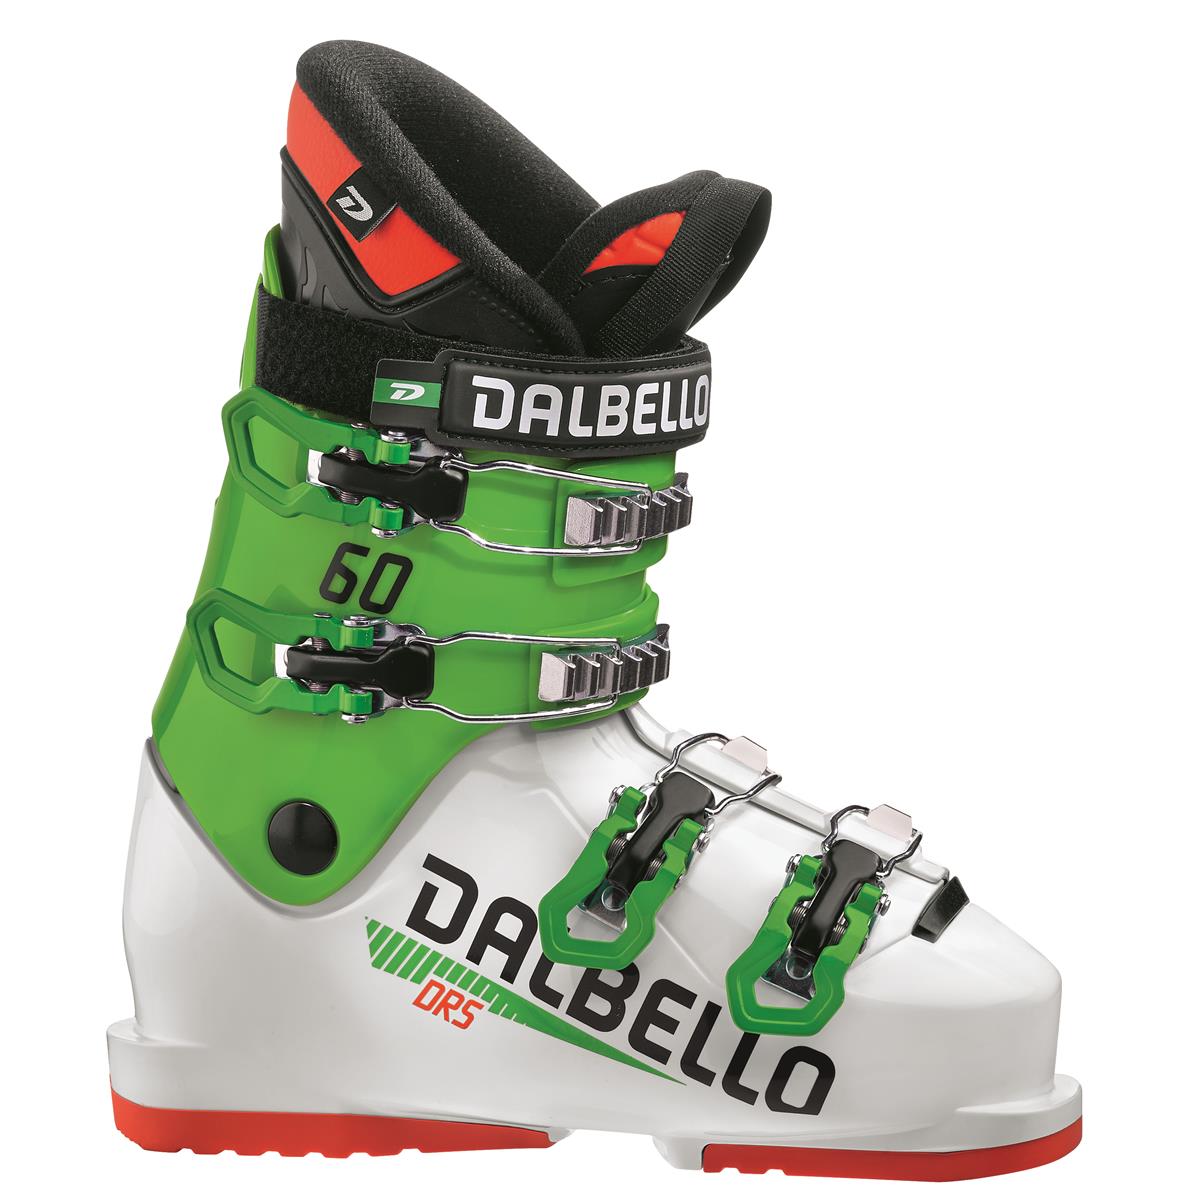 DALBELLO DRS 60 JR Kinder Skischuhe Saison 2019/20 102403 